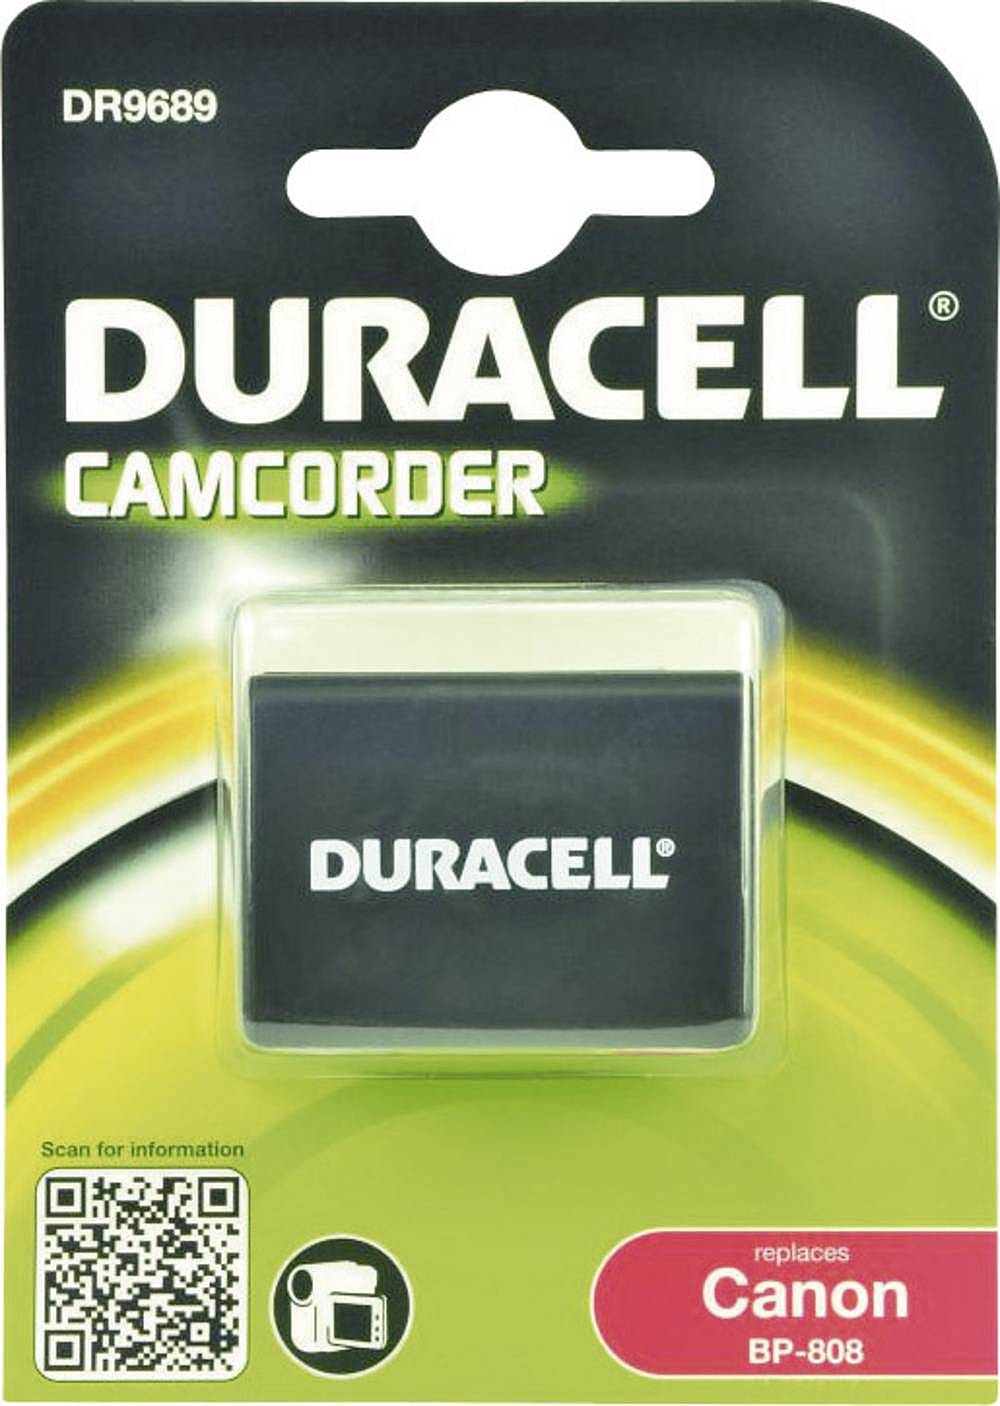 Duracell BP-808 Kamera-Akku ersetzt Original-Akku Batterie Kamera 7.4 V 850 mAh